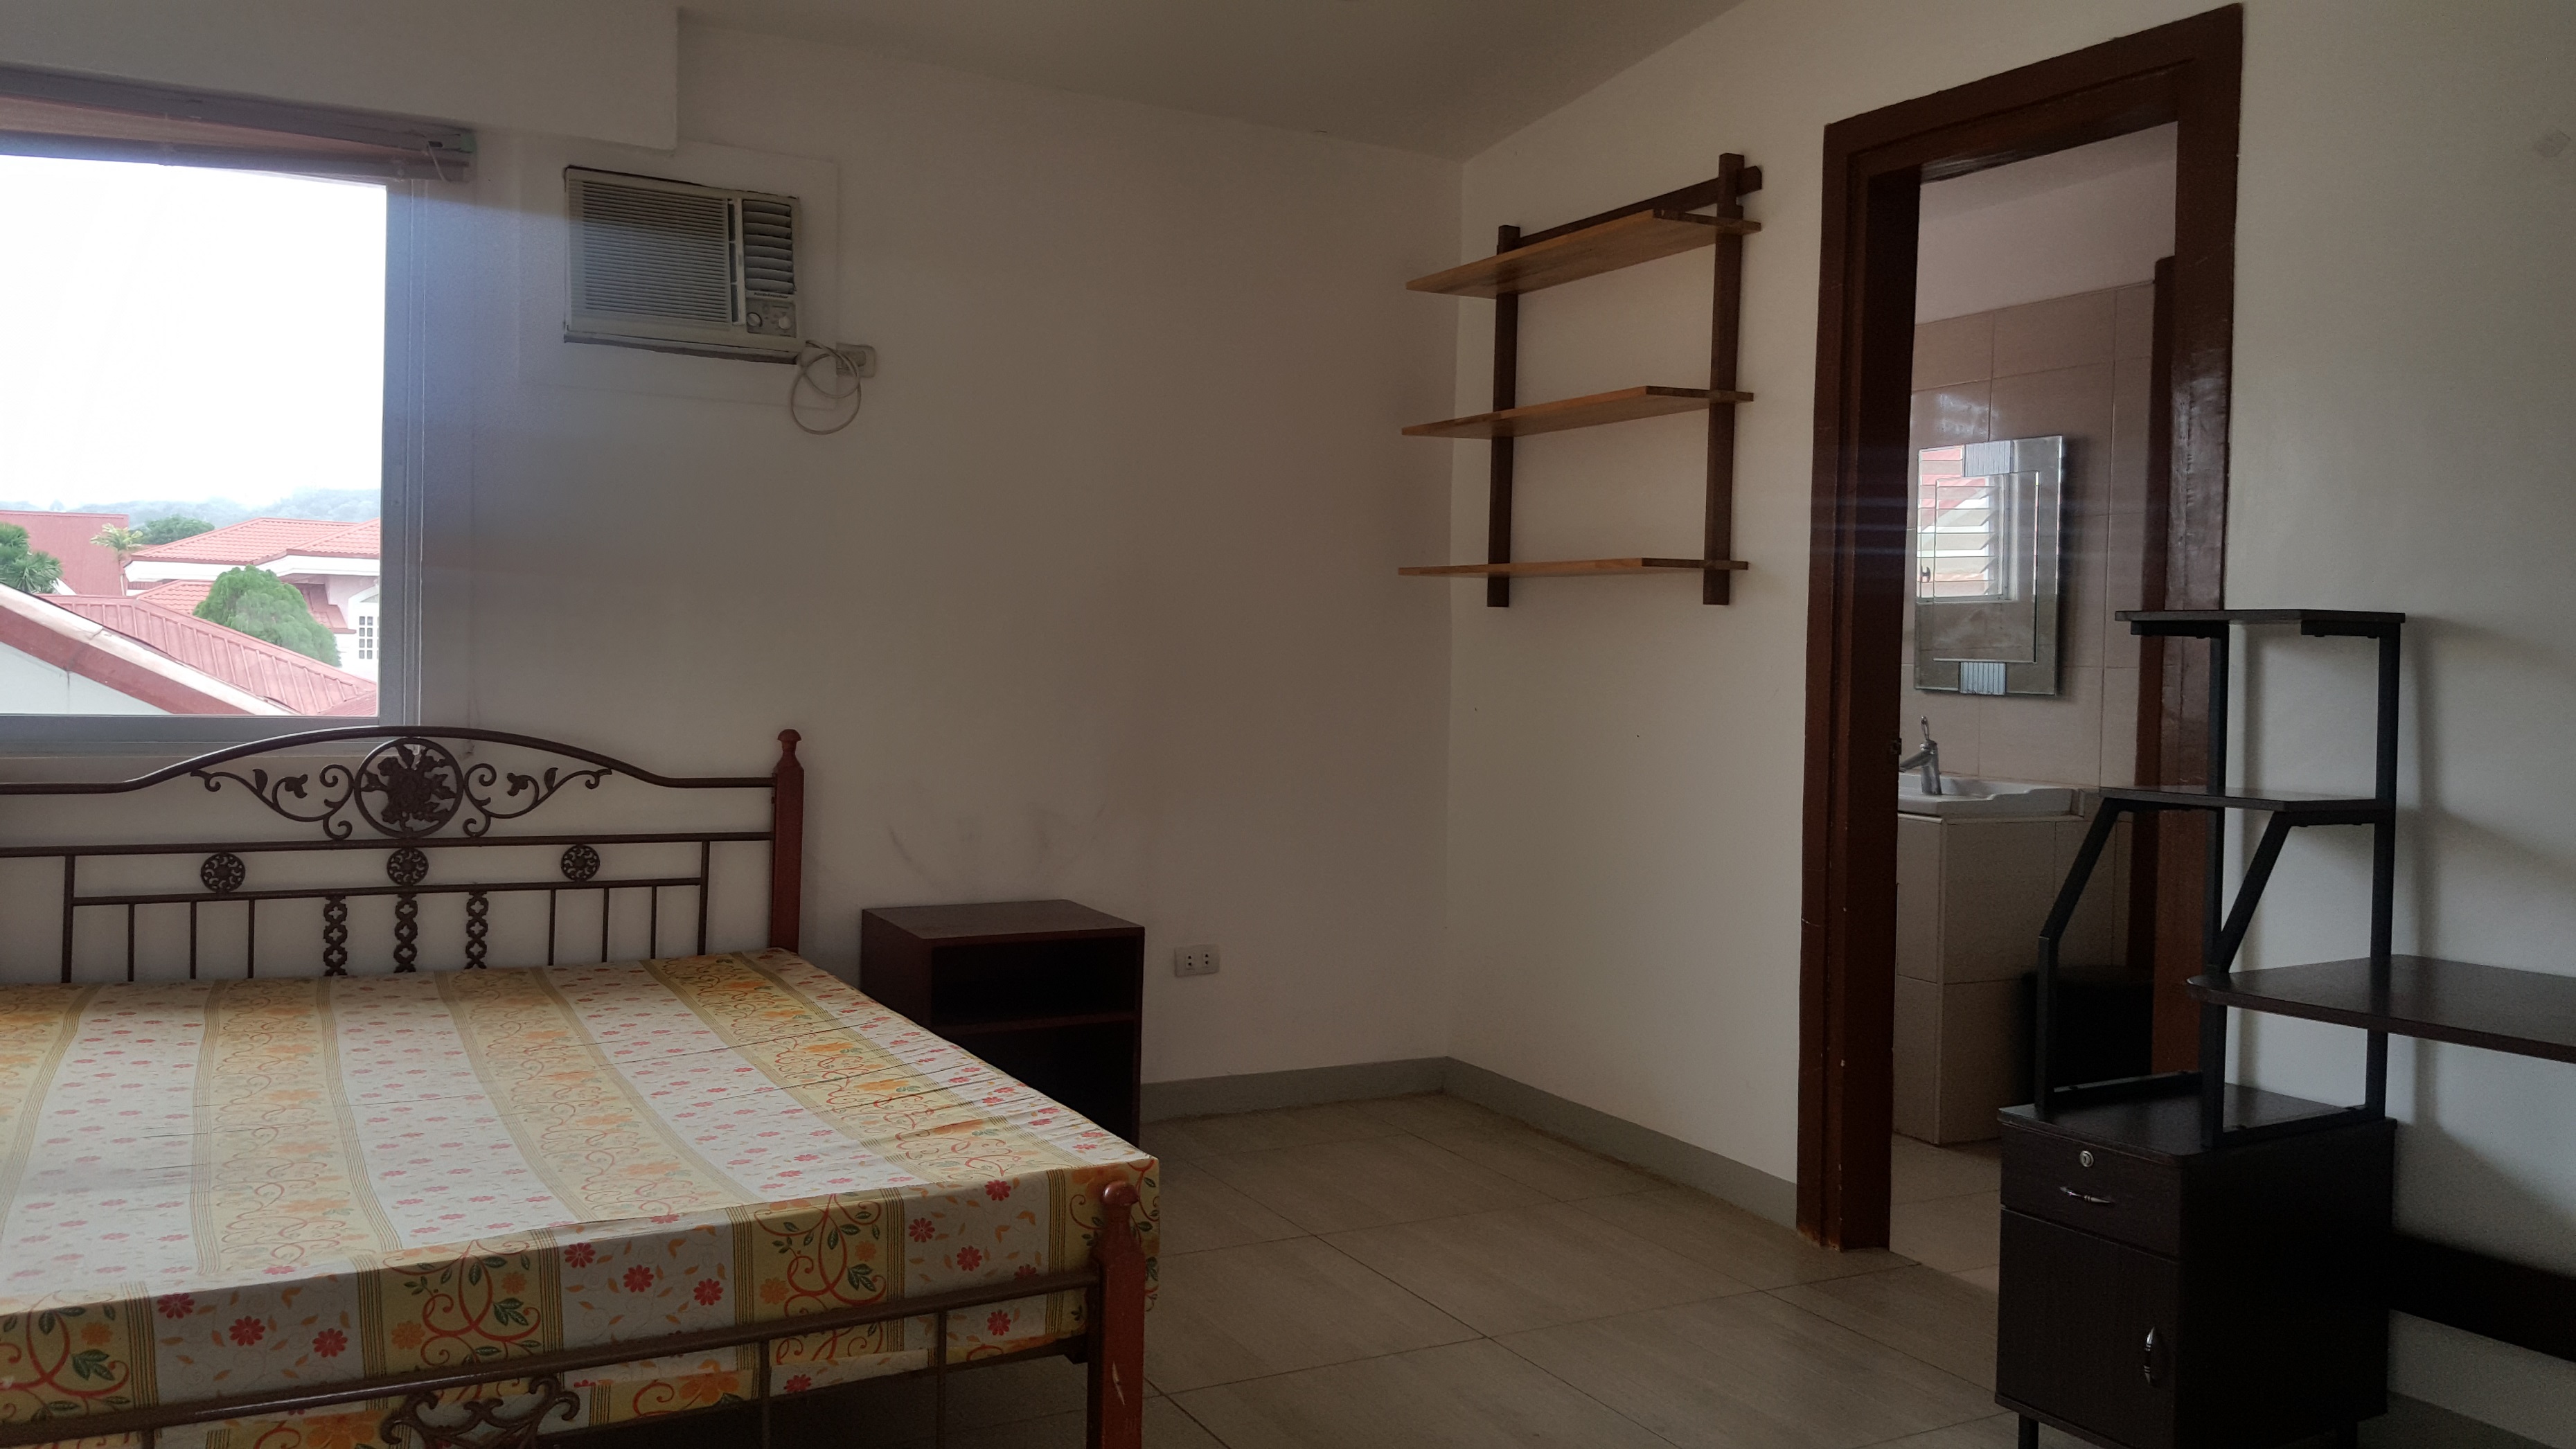 4-bedrooms-furnished-house-in-banilad-cebu-city